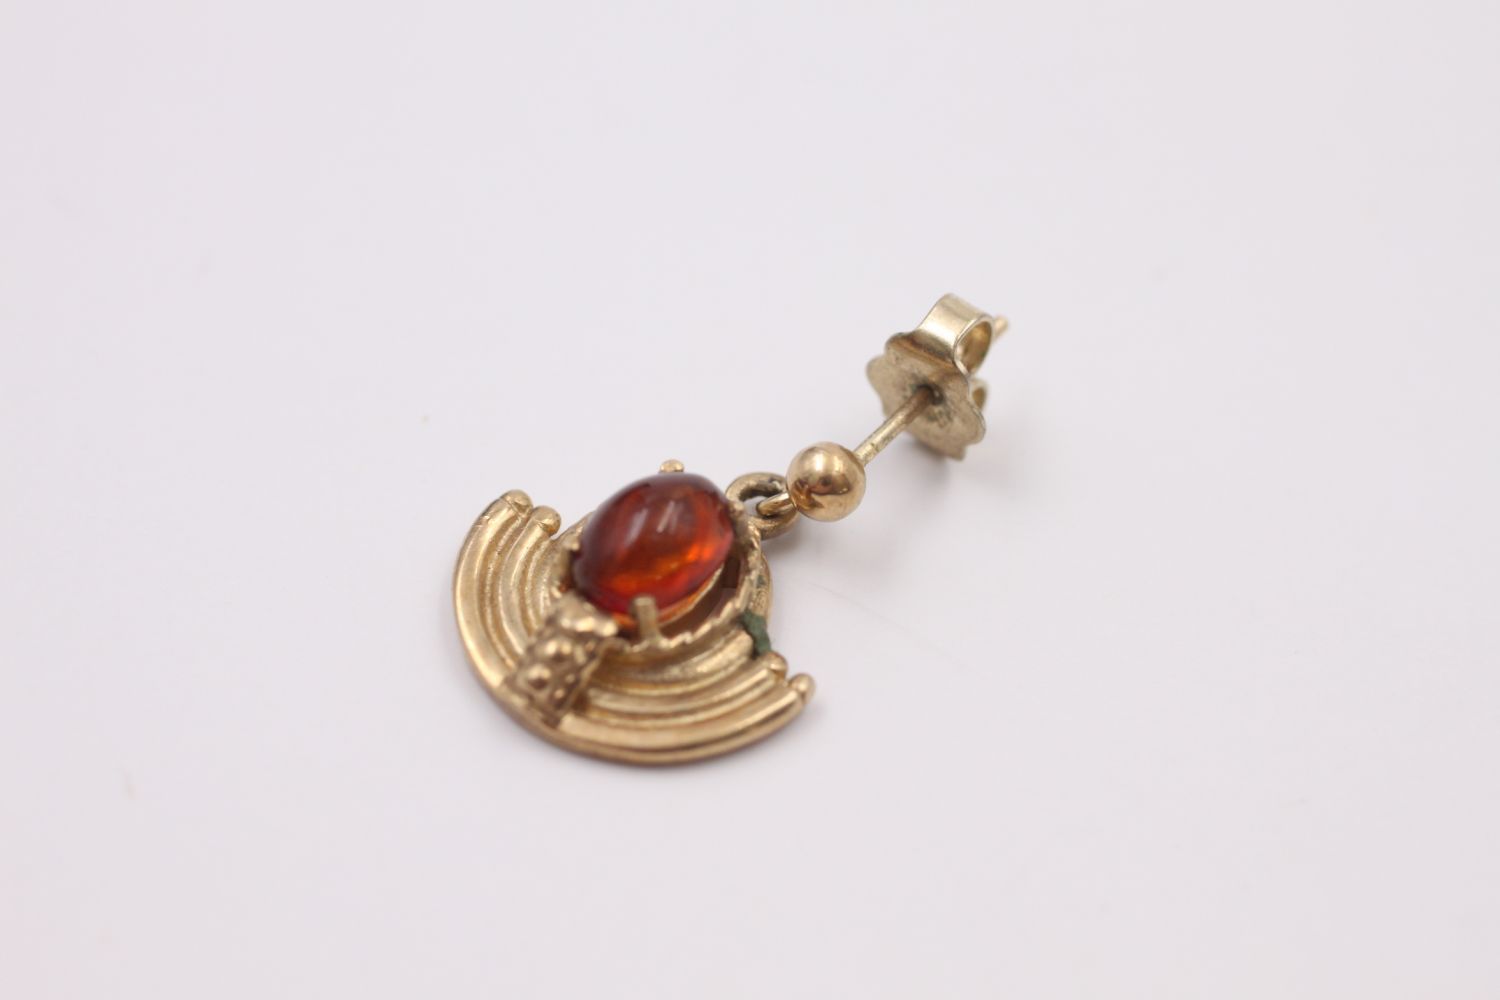 9ct gold vintage modernist design baltic amber drop earrings 4 grams gross - Image 2 of 4